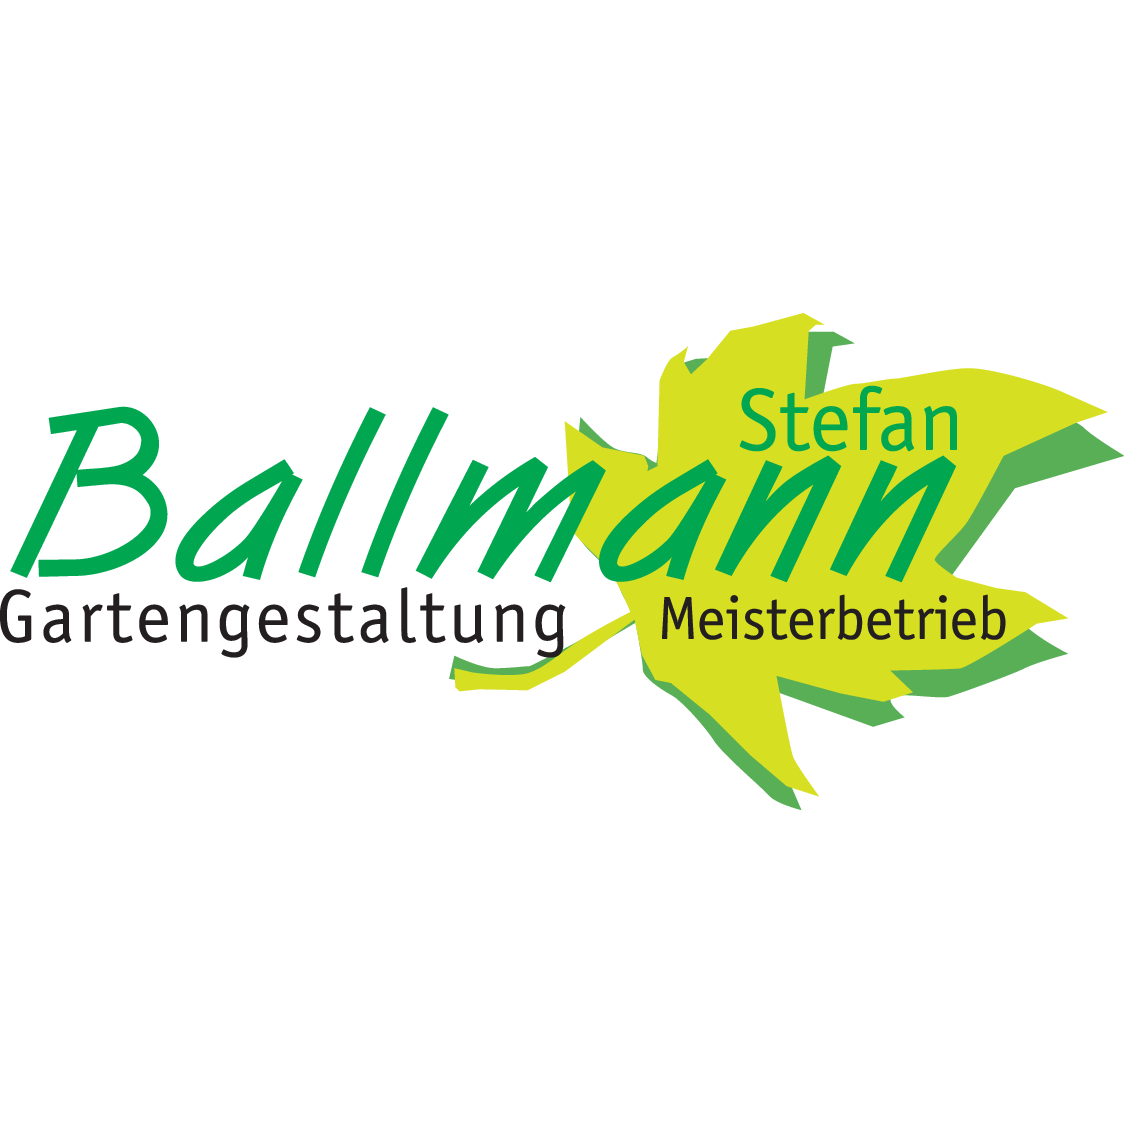 Ballmann Stefan Gartengestaltung Meisterbetrieb Logo